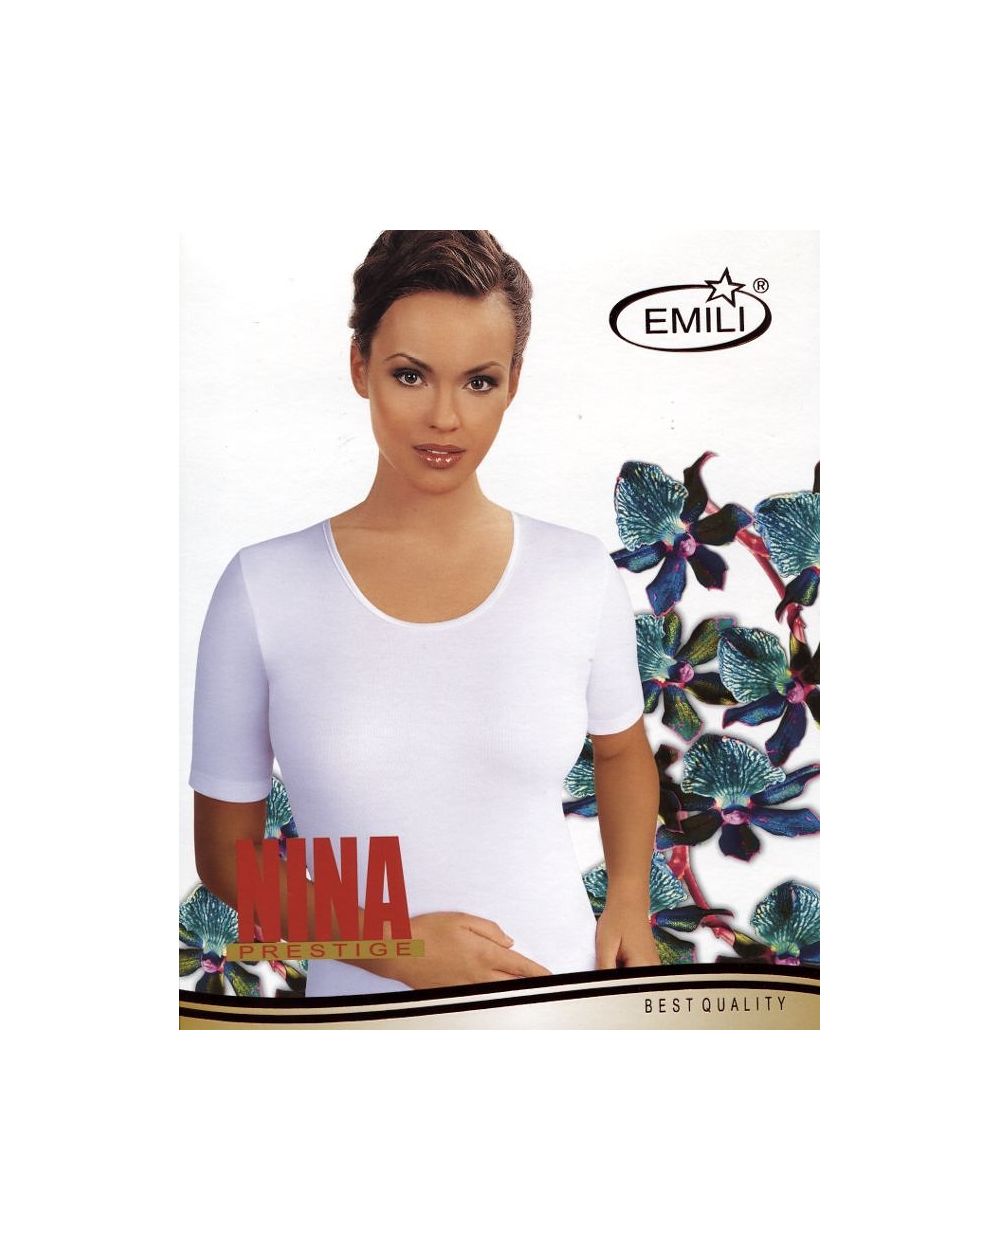 Emila Nina weißes T-Shirt S-XL